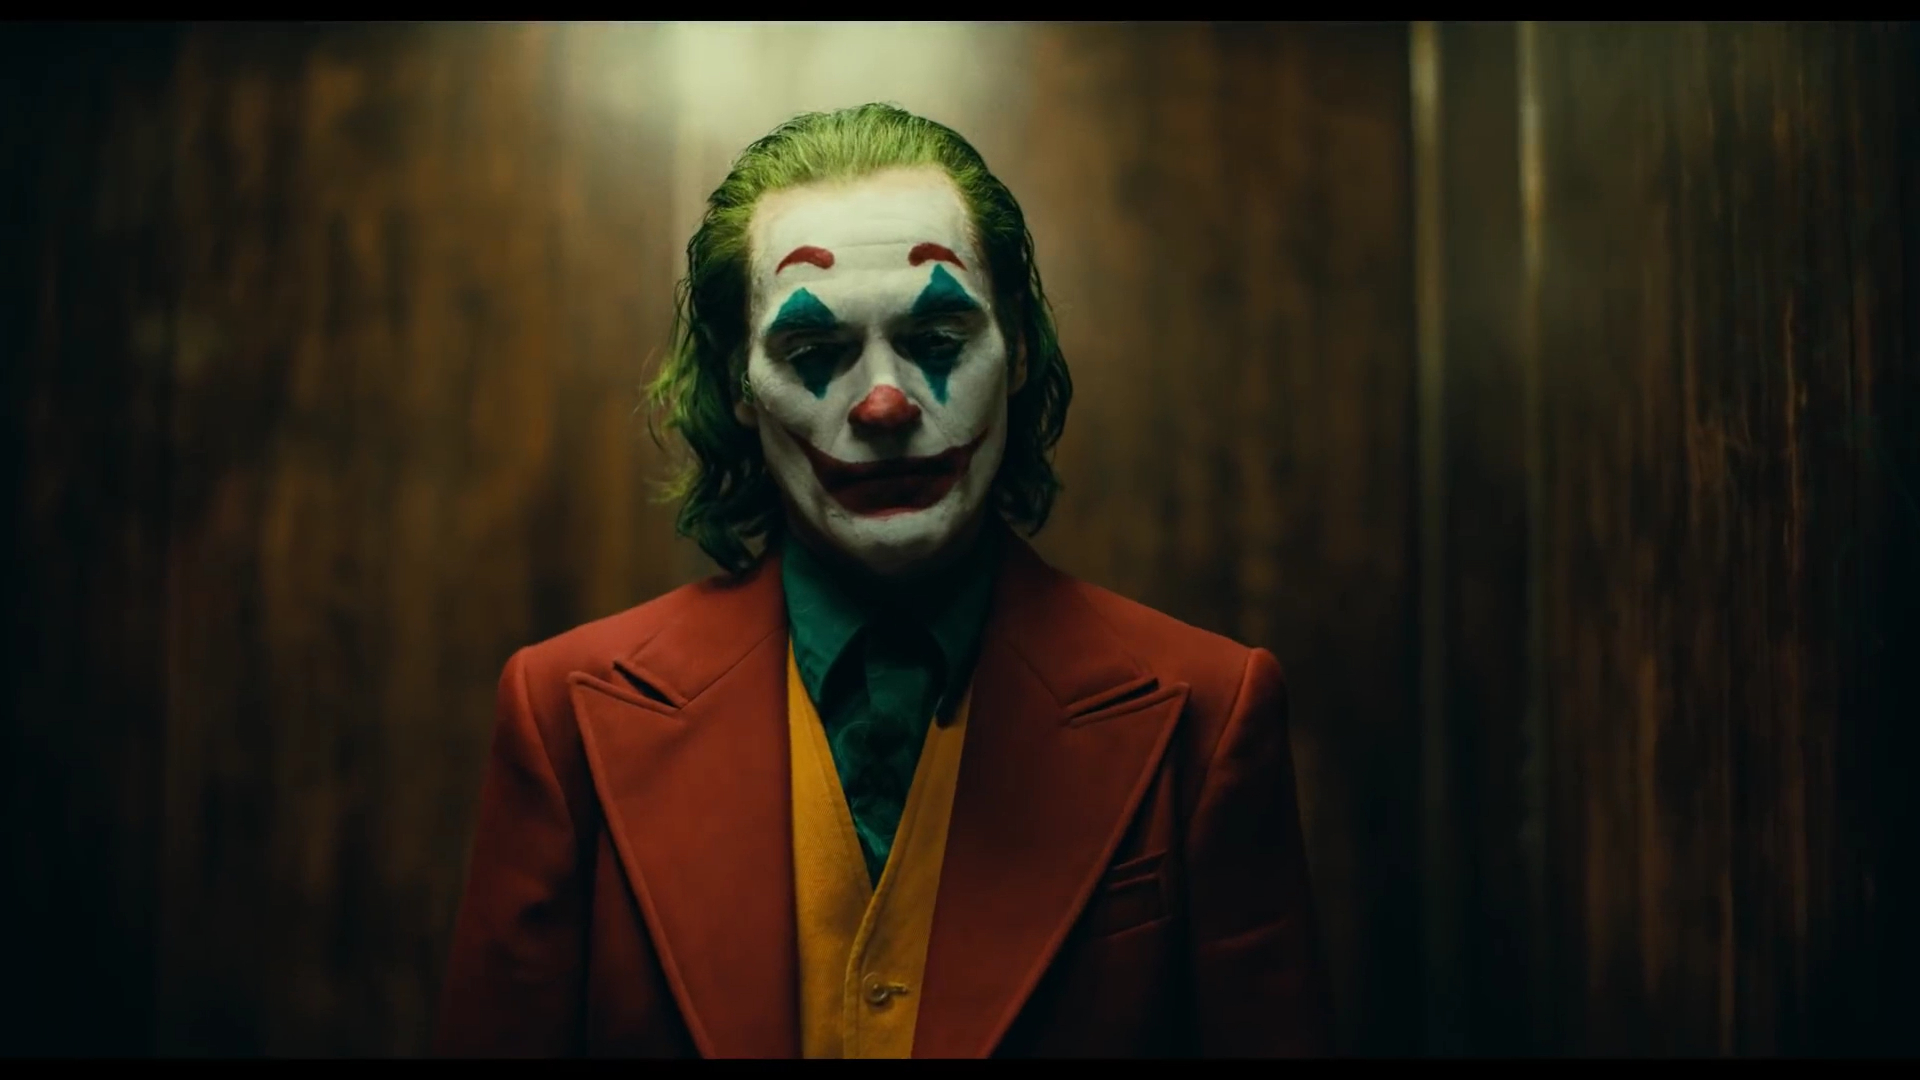 Joker (2019) | The 8 Best Superhero Movies With Oscar Wins or Nominations | Zestradar